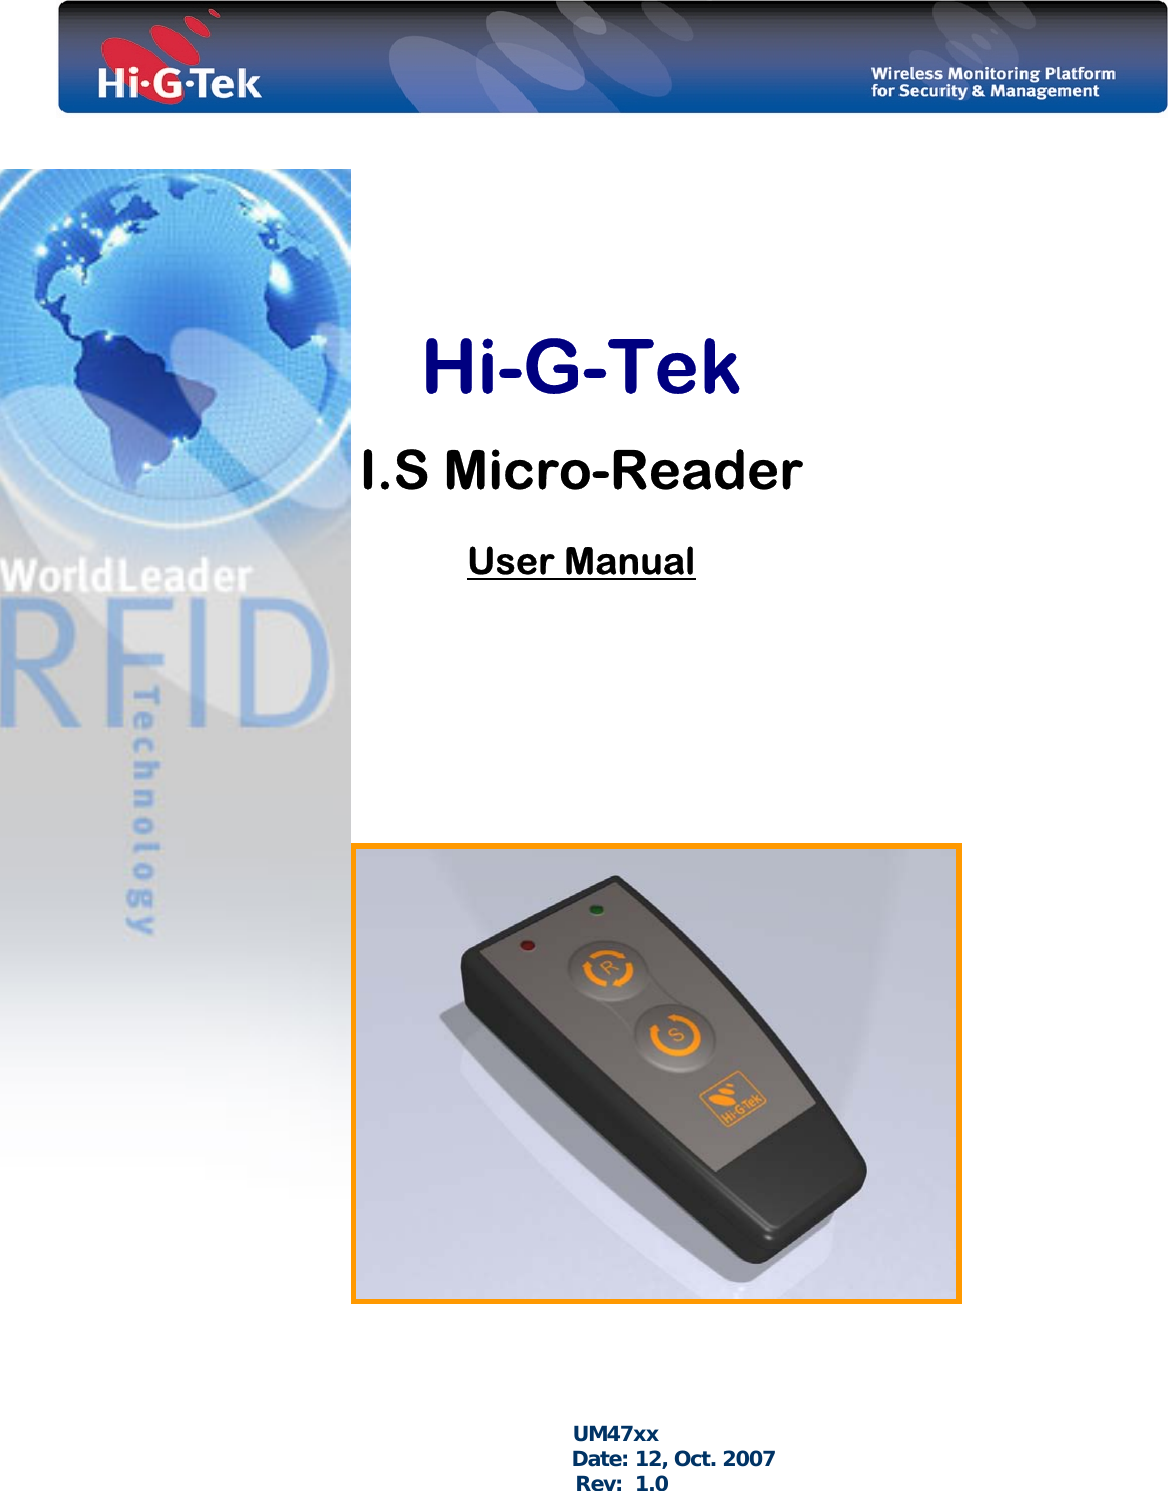                Hi-G-Tek  I.S Micro-Reader   User Manual                                                        UM47xx                      Date: 12, Oct. 2007     Rev:  1.0    